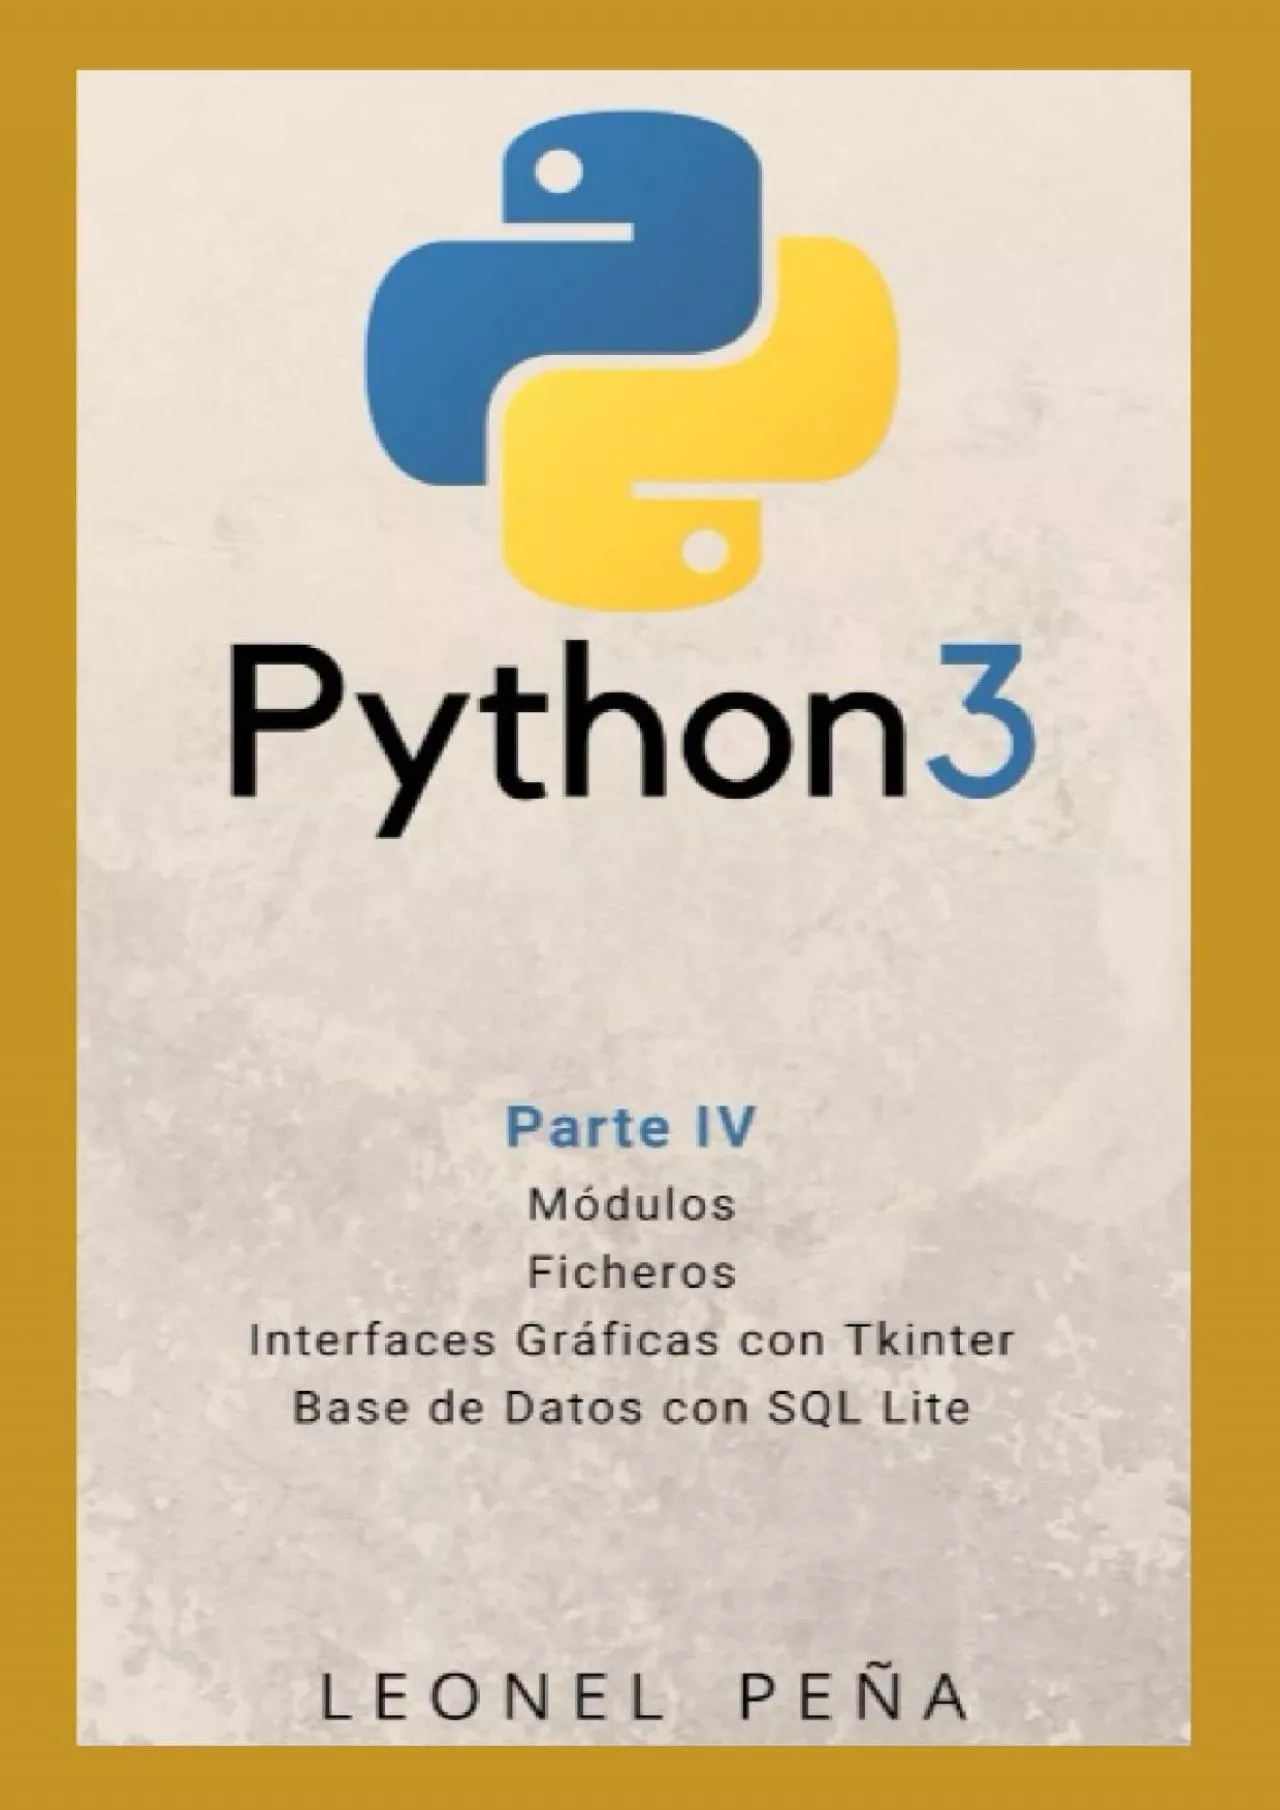 [PDF]-PYTHON 3 Parte IV - Módulos. Ficheros. Interfaces gráficas Tkinter. Base de Datos